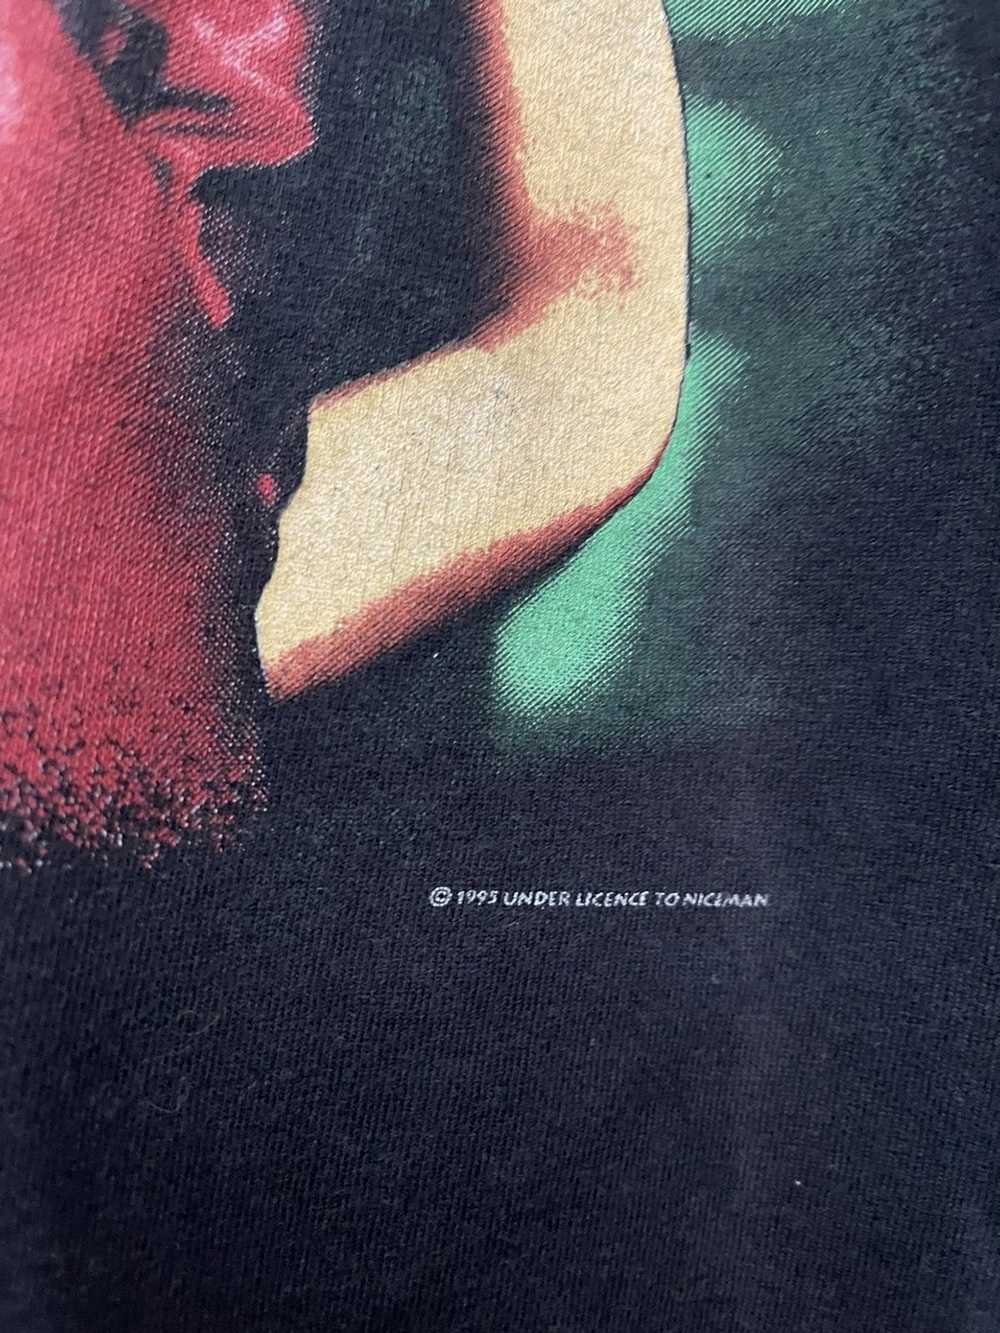 Band Tees × Vintage Vintage 90s PJ Harvey “To Bri… - image 6